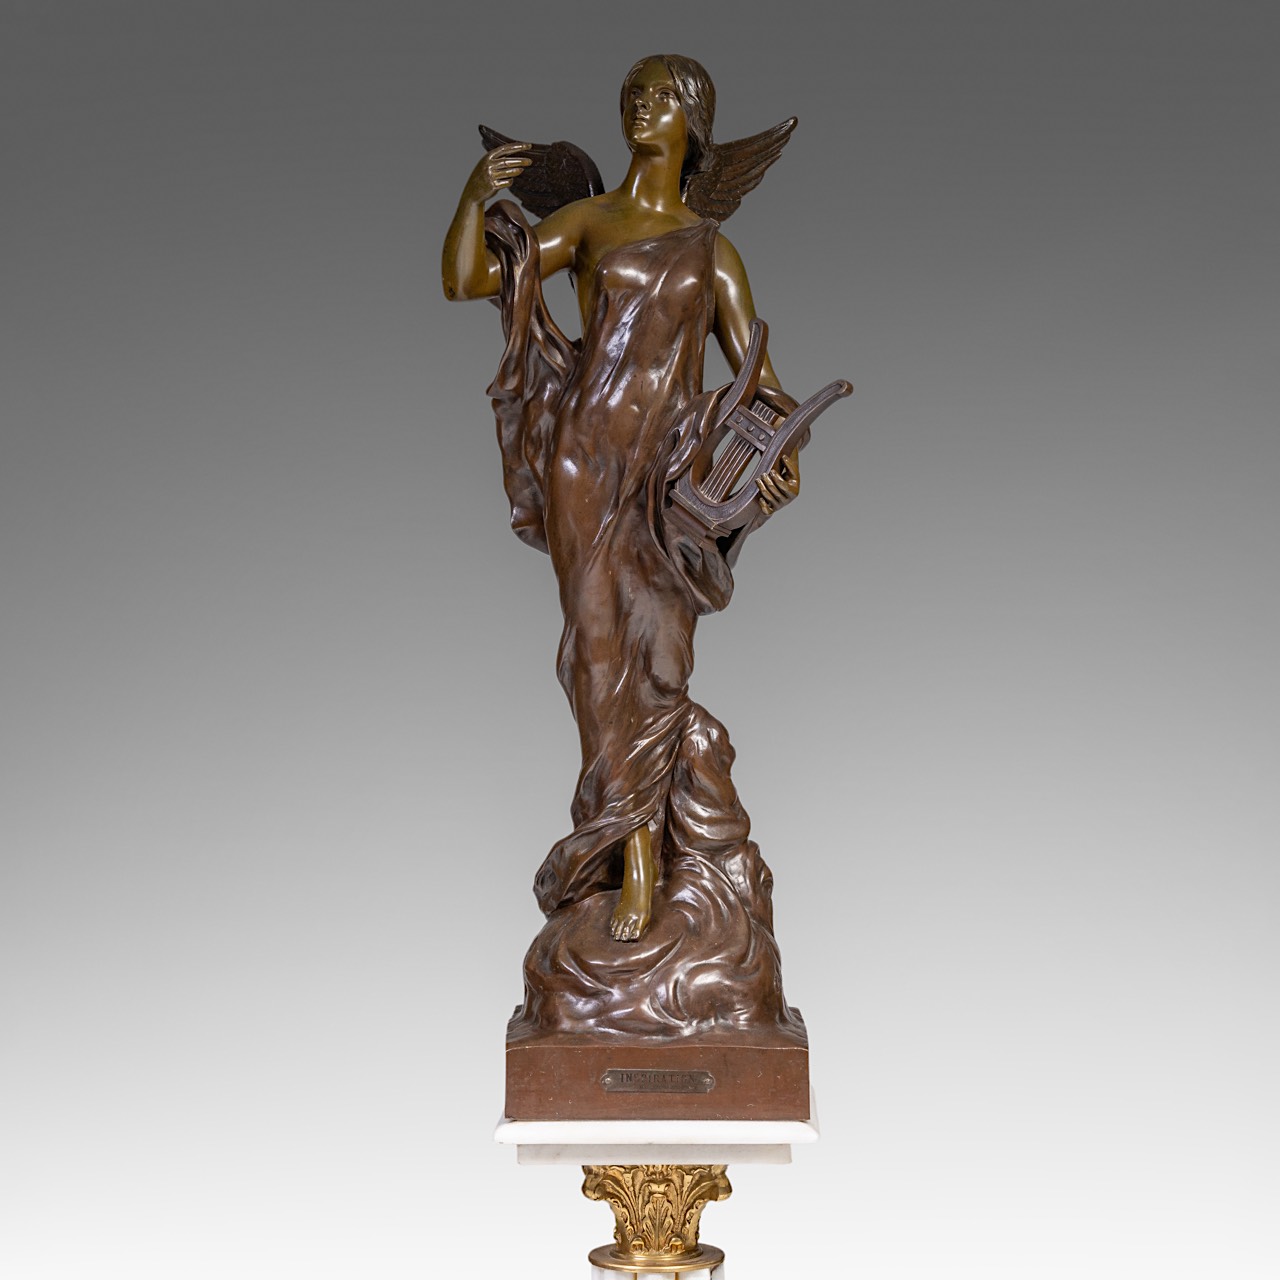 Pierre Etienne Daniel Campagne (1851-1914), 'L'inspiration', patinated bronze, H 85 cm - Image 19 of 26